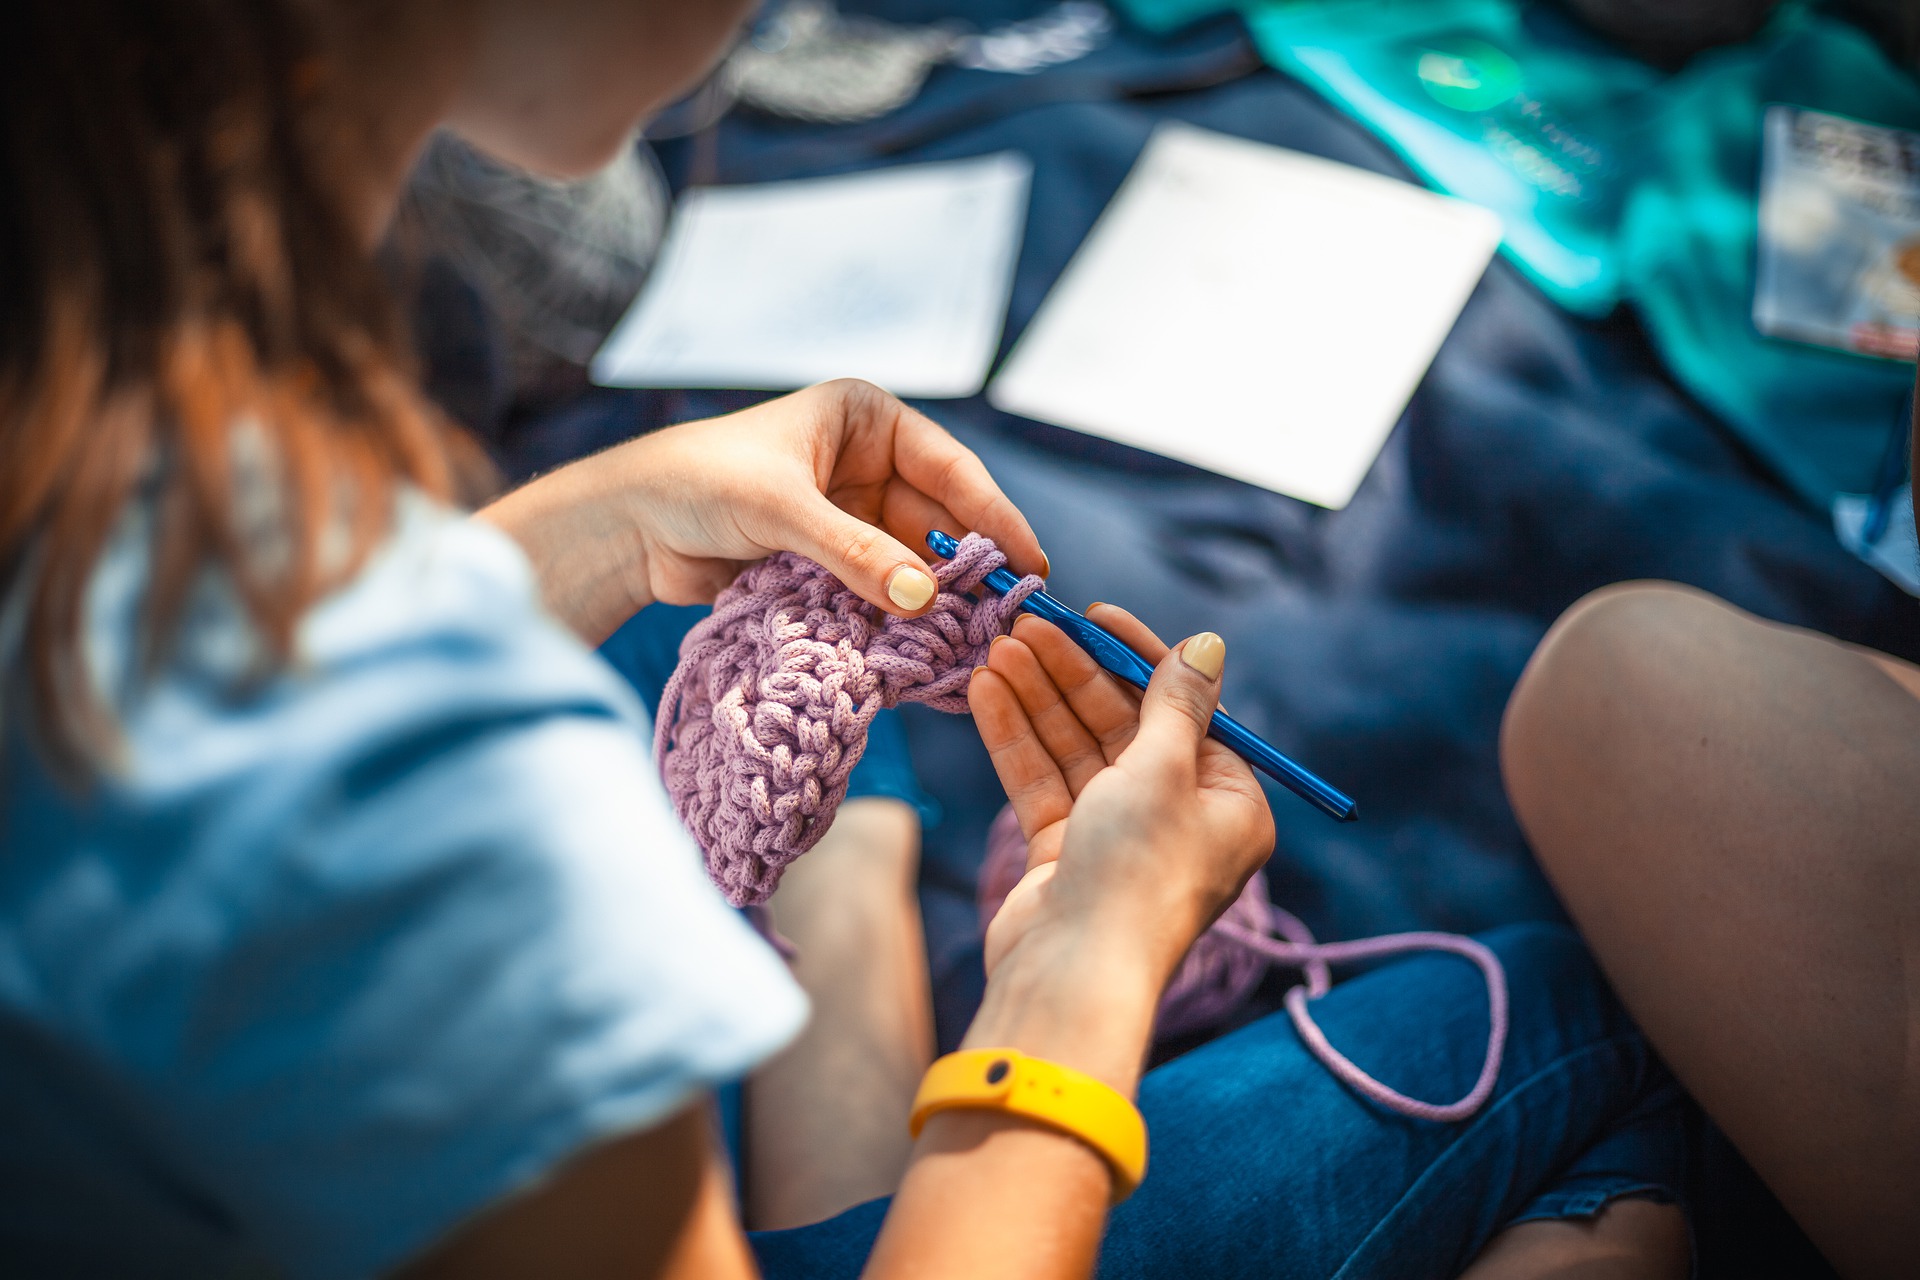 Knitting as self-care for nurses